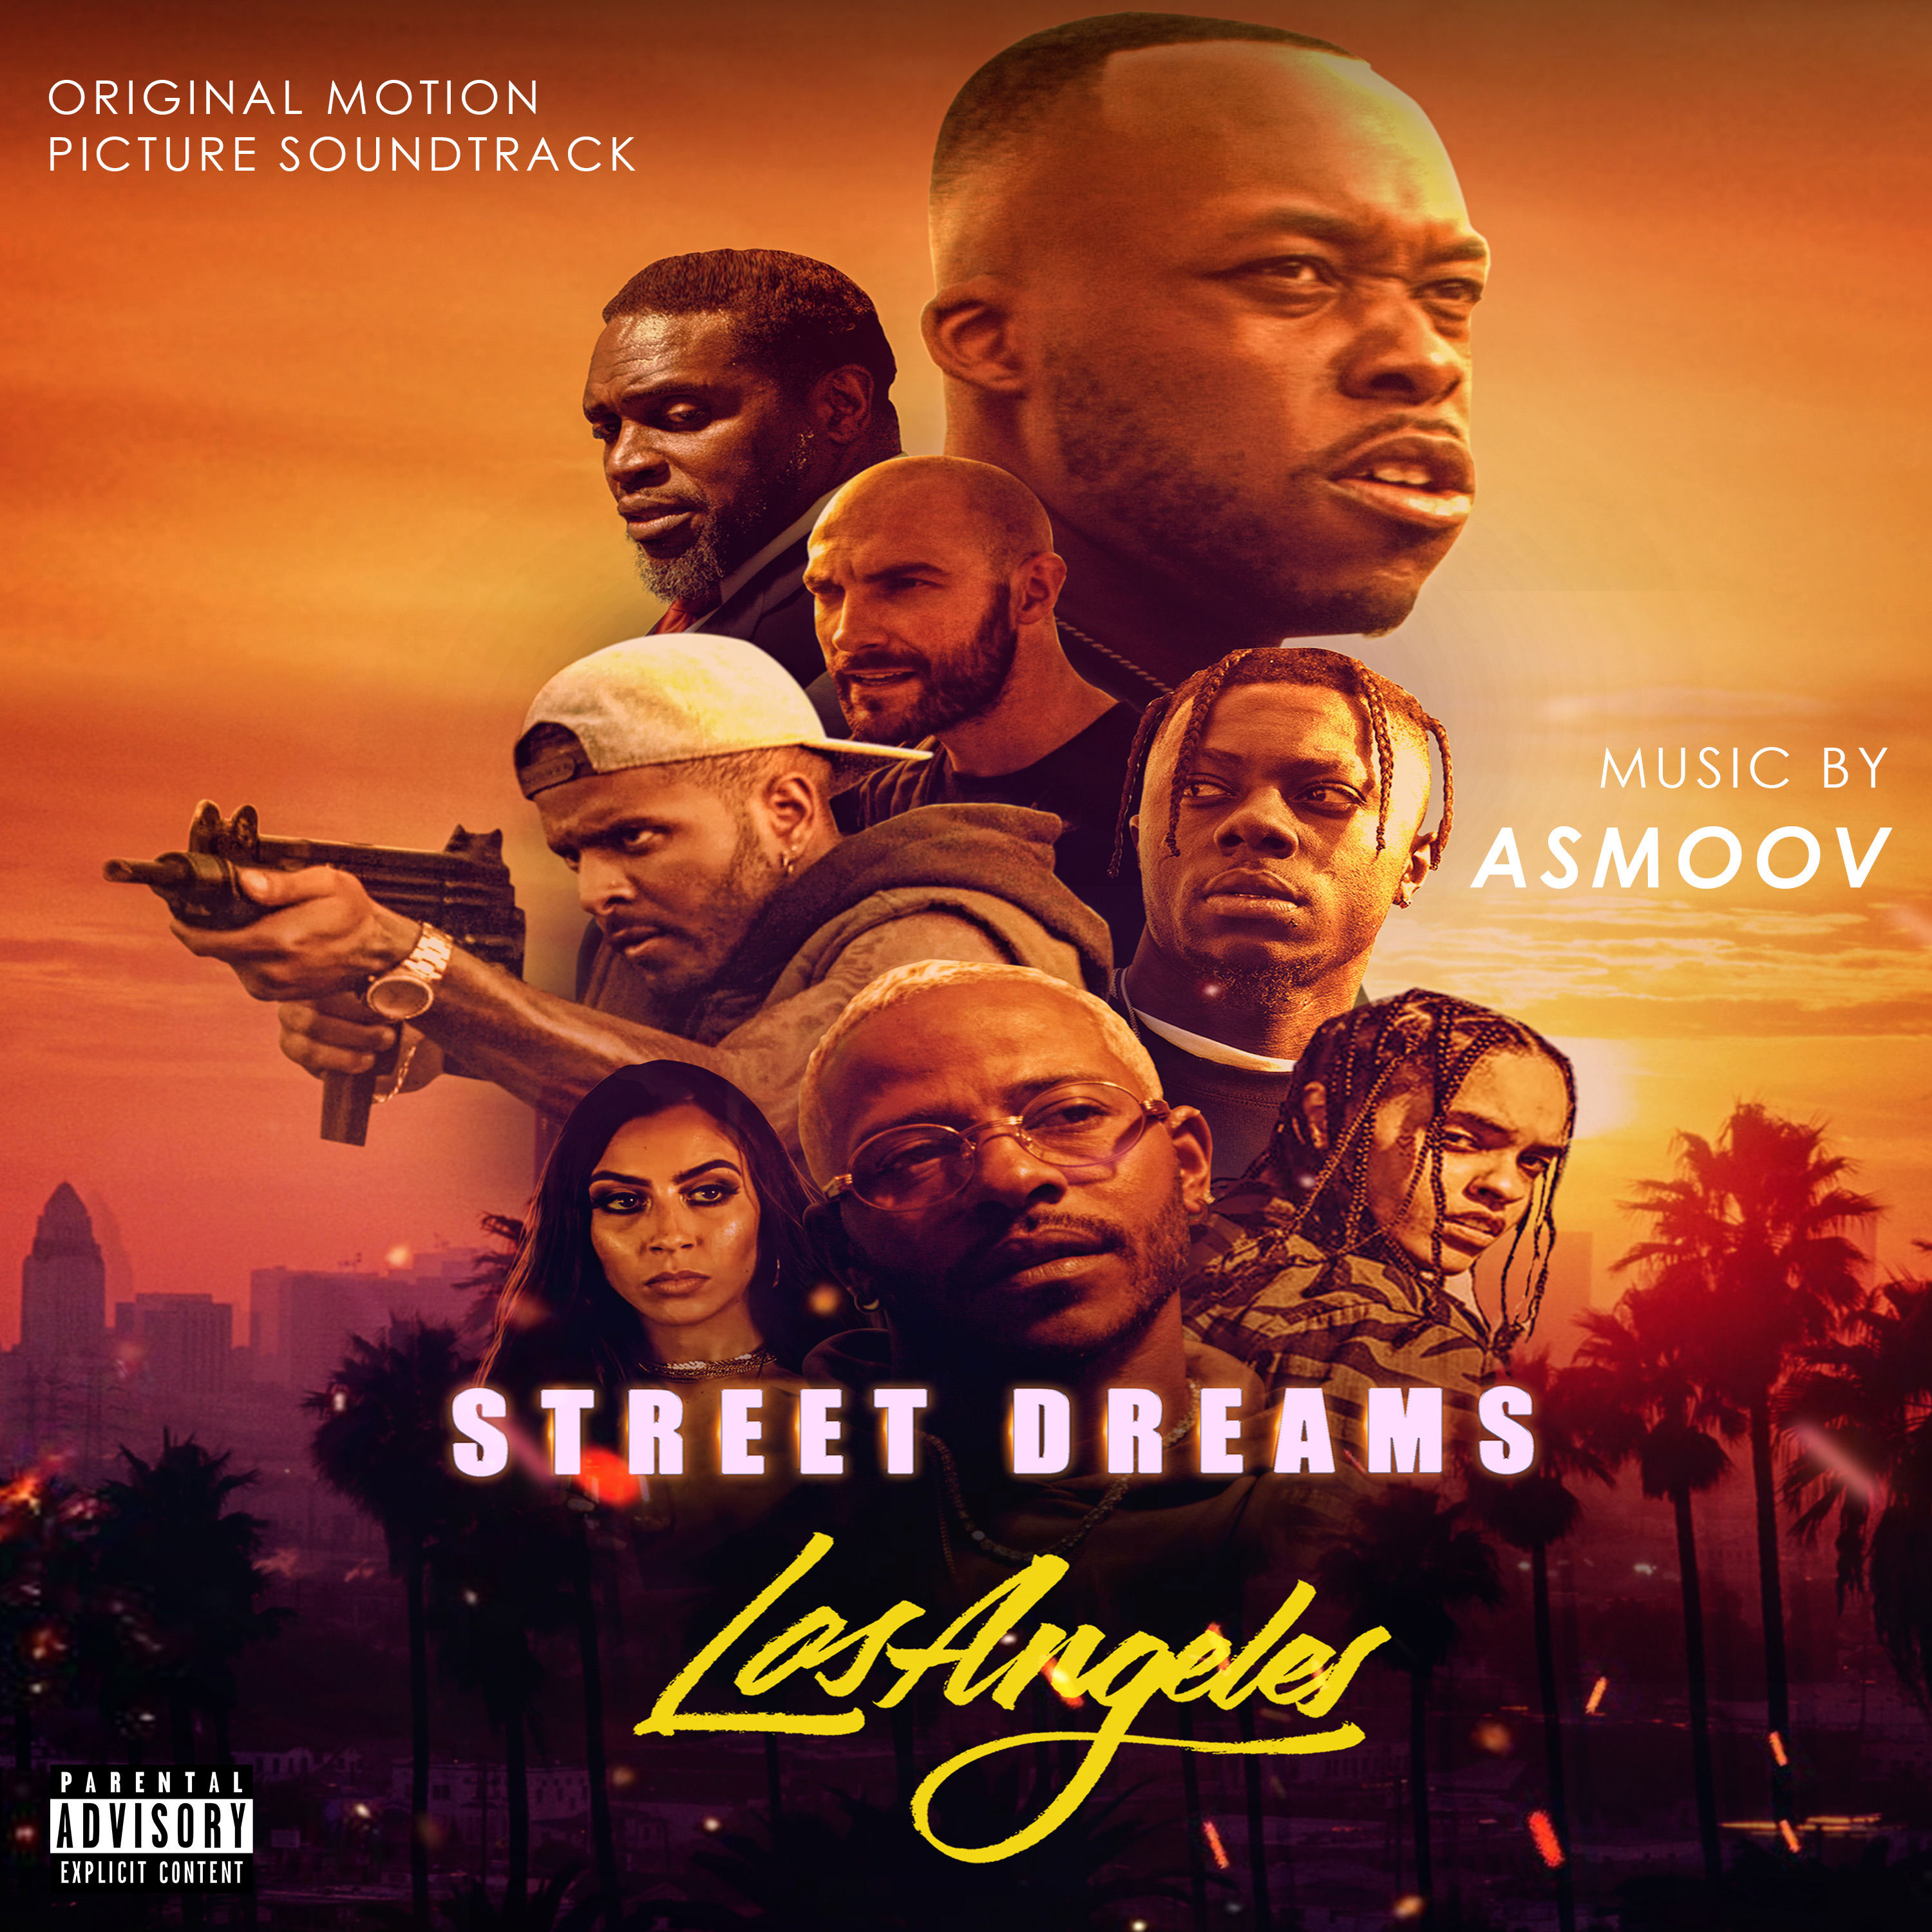 Street dreams на русском. Уличные мечты – Лос-Анджелес 2018 (боевик, драма) m. Dreamland Лос Анджелес.